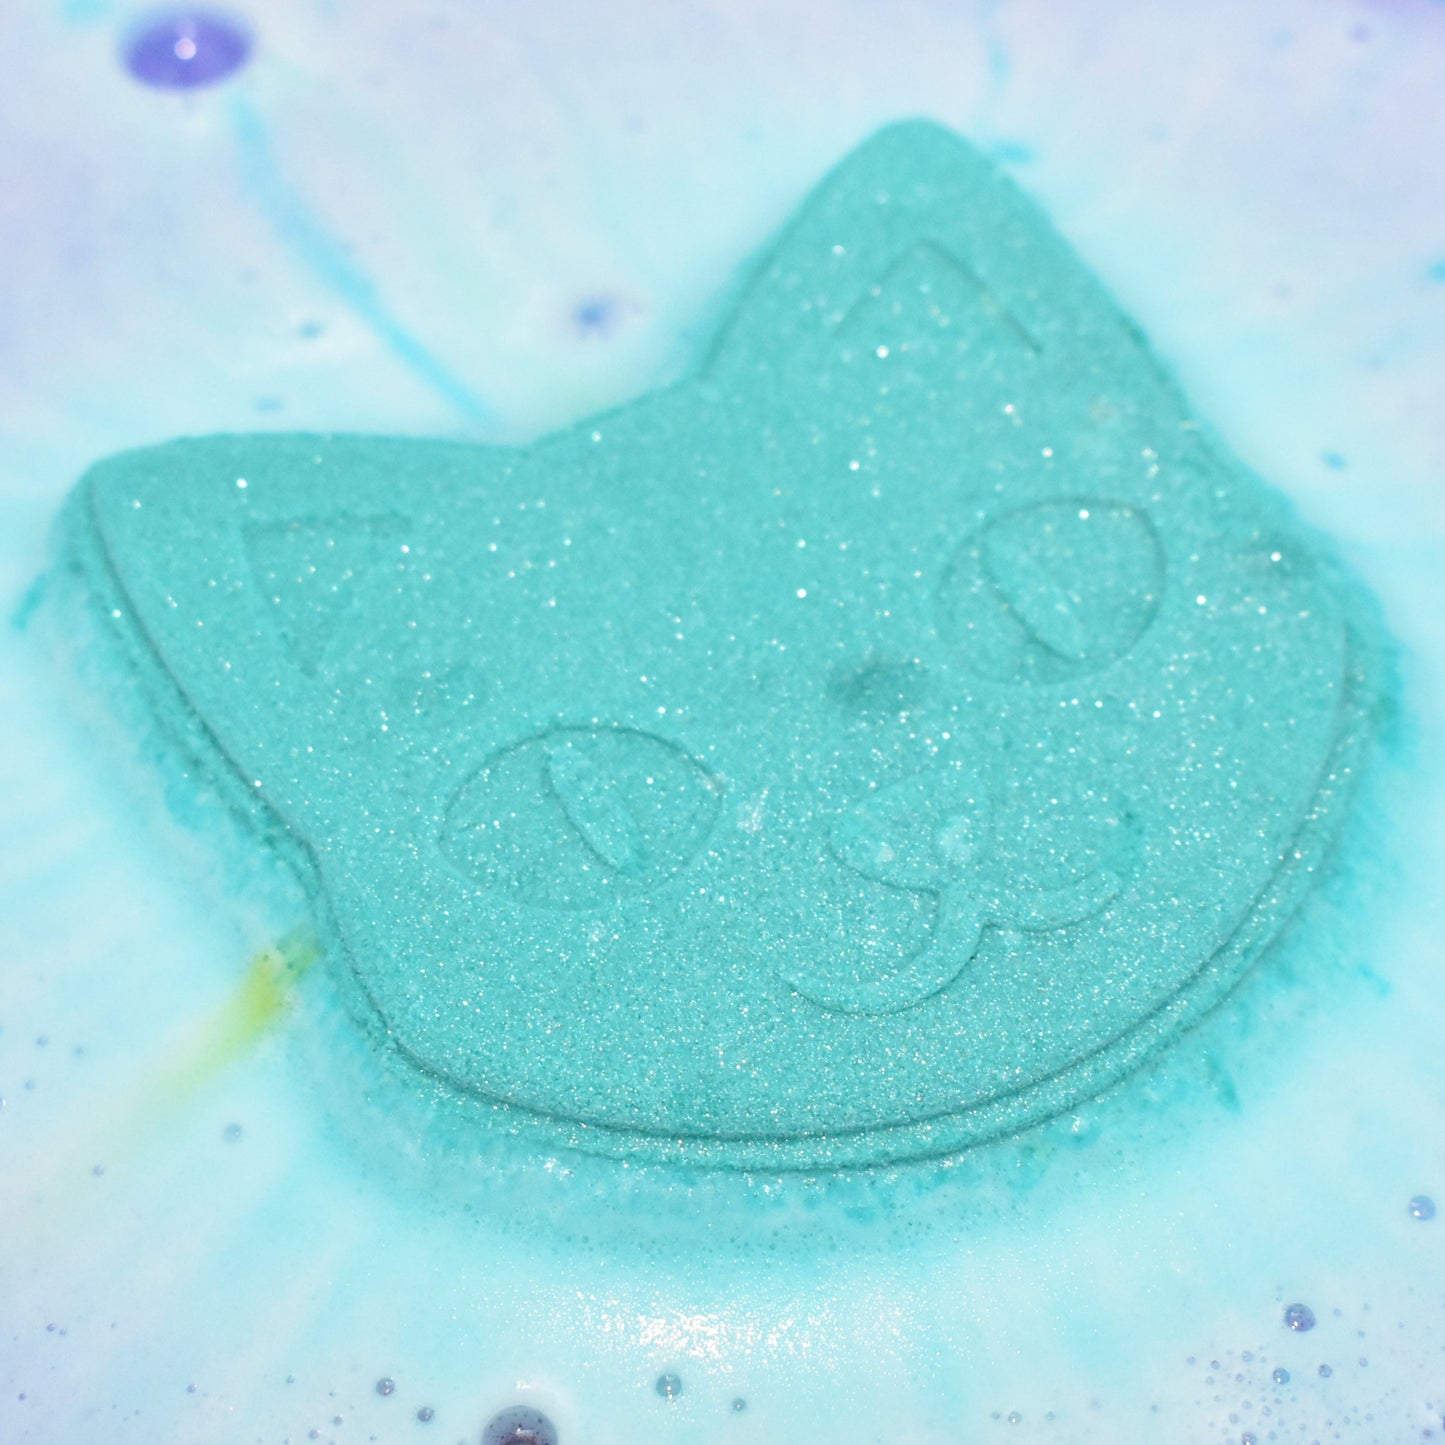 pretty kitty bath bomb - Small Batch Soaps